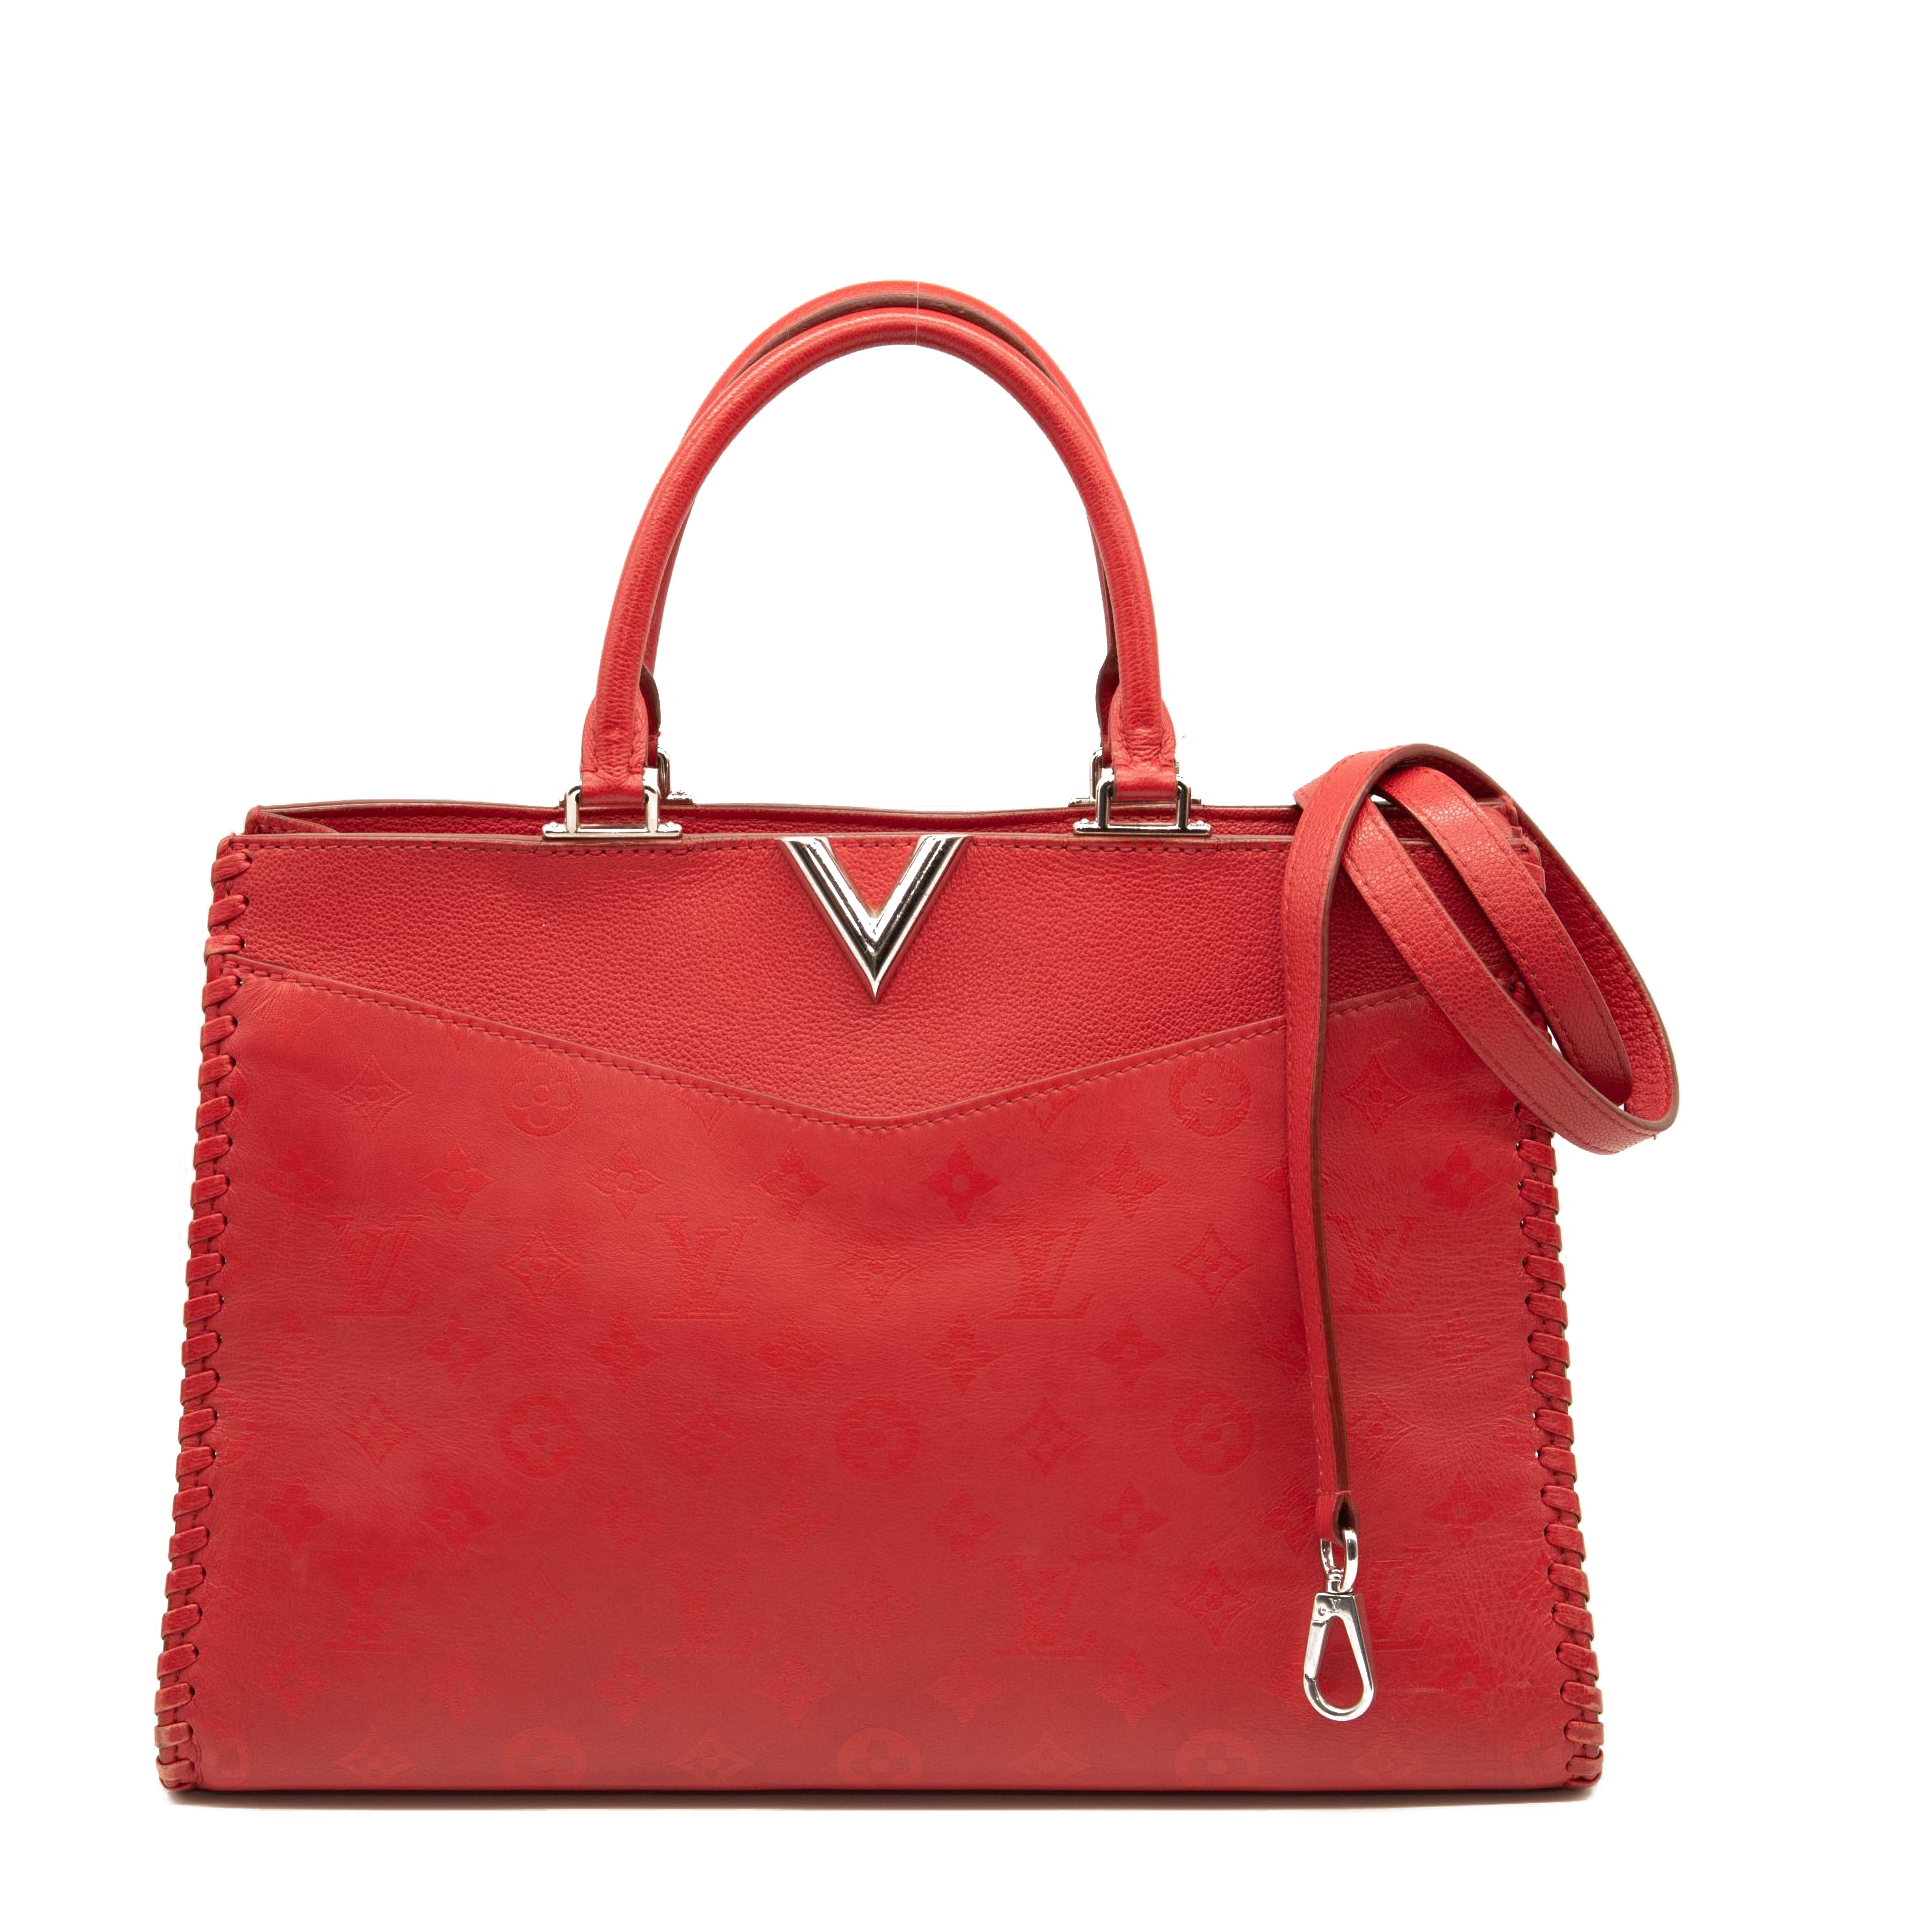 Louis Vuitton Zipped Tote Bag